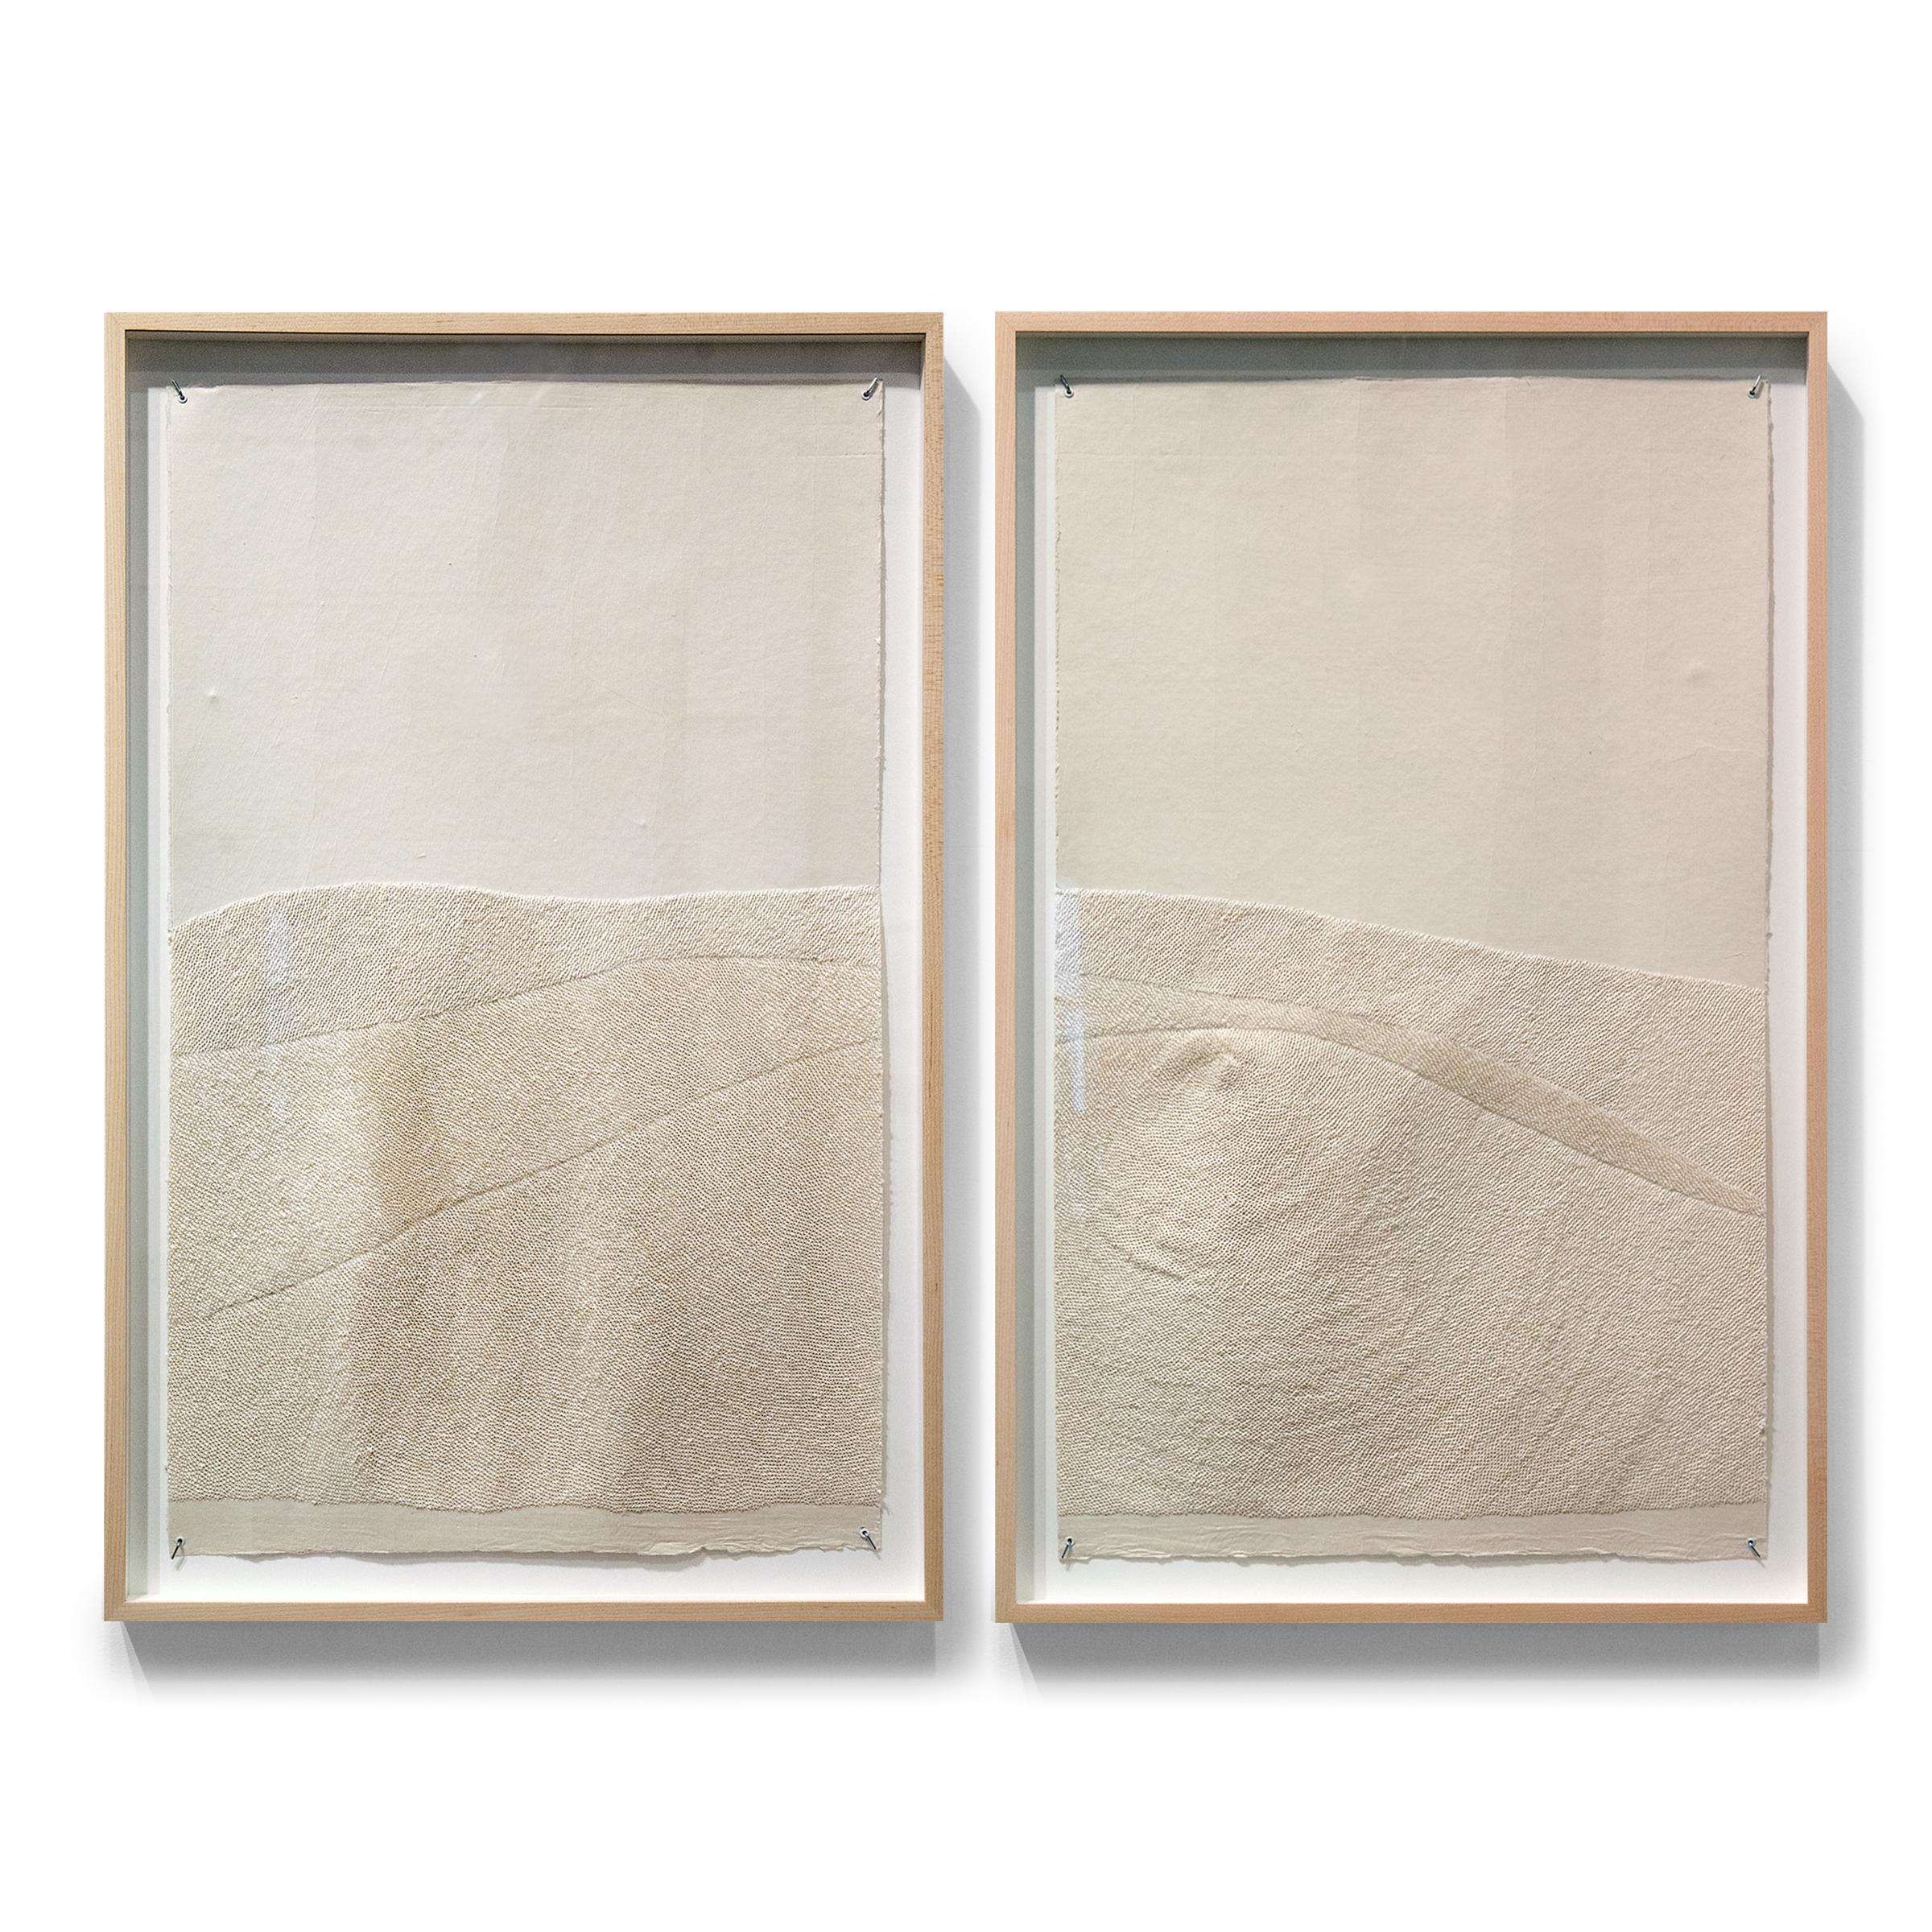 "61, 800 Pinpricks, " Framed Work on Handmade Paper, 2019 - Mixed Media Art by Fu Xiaotong